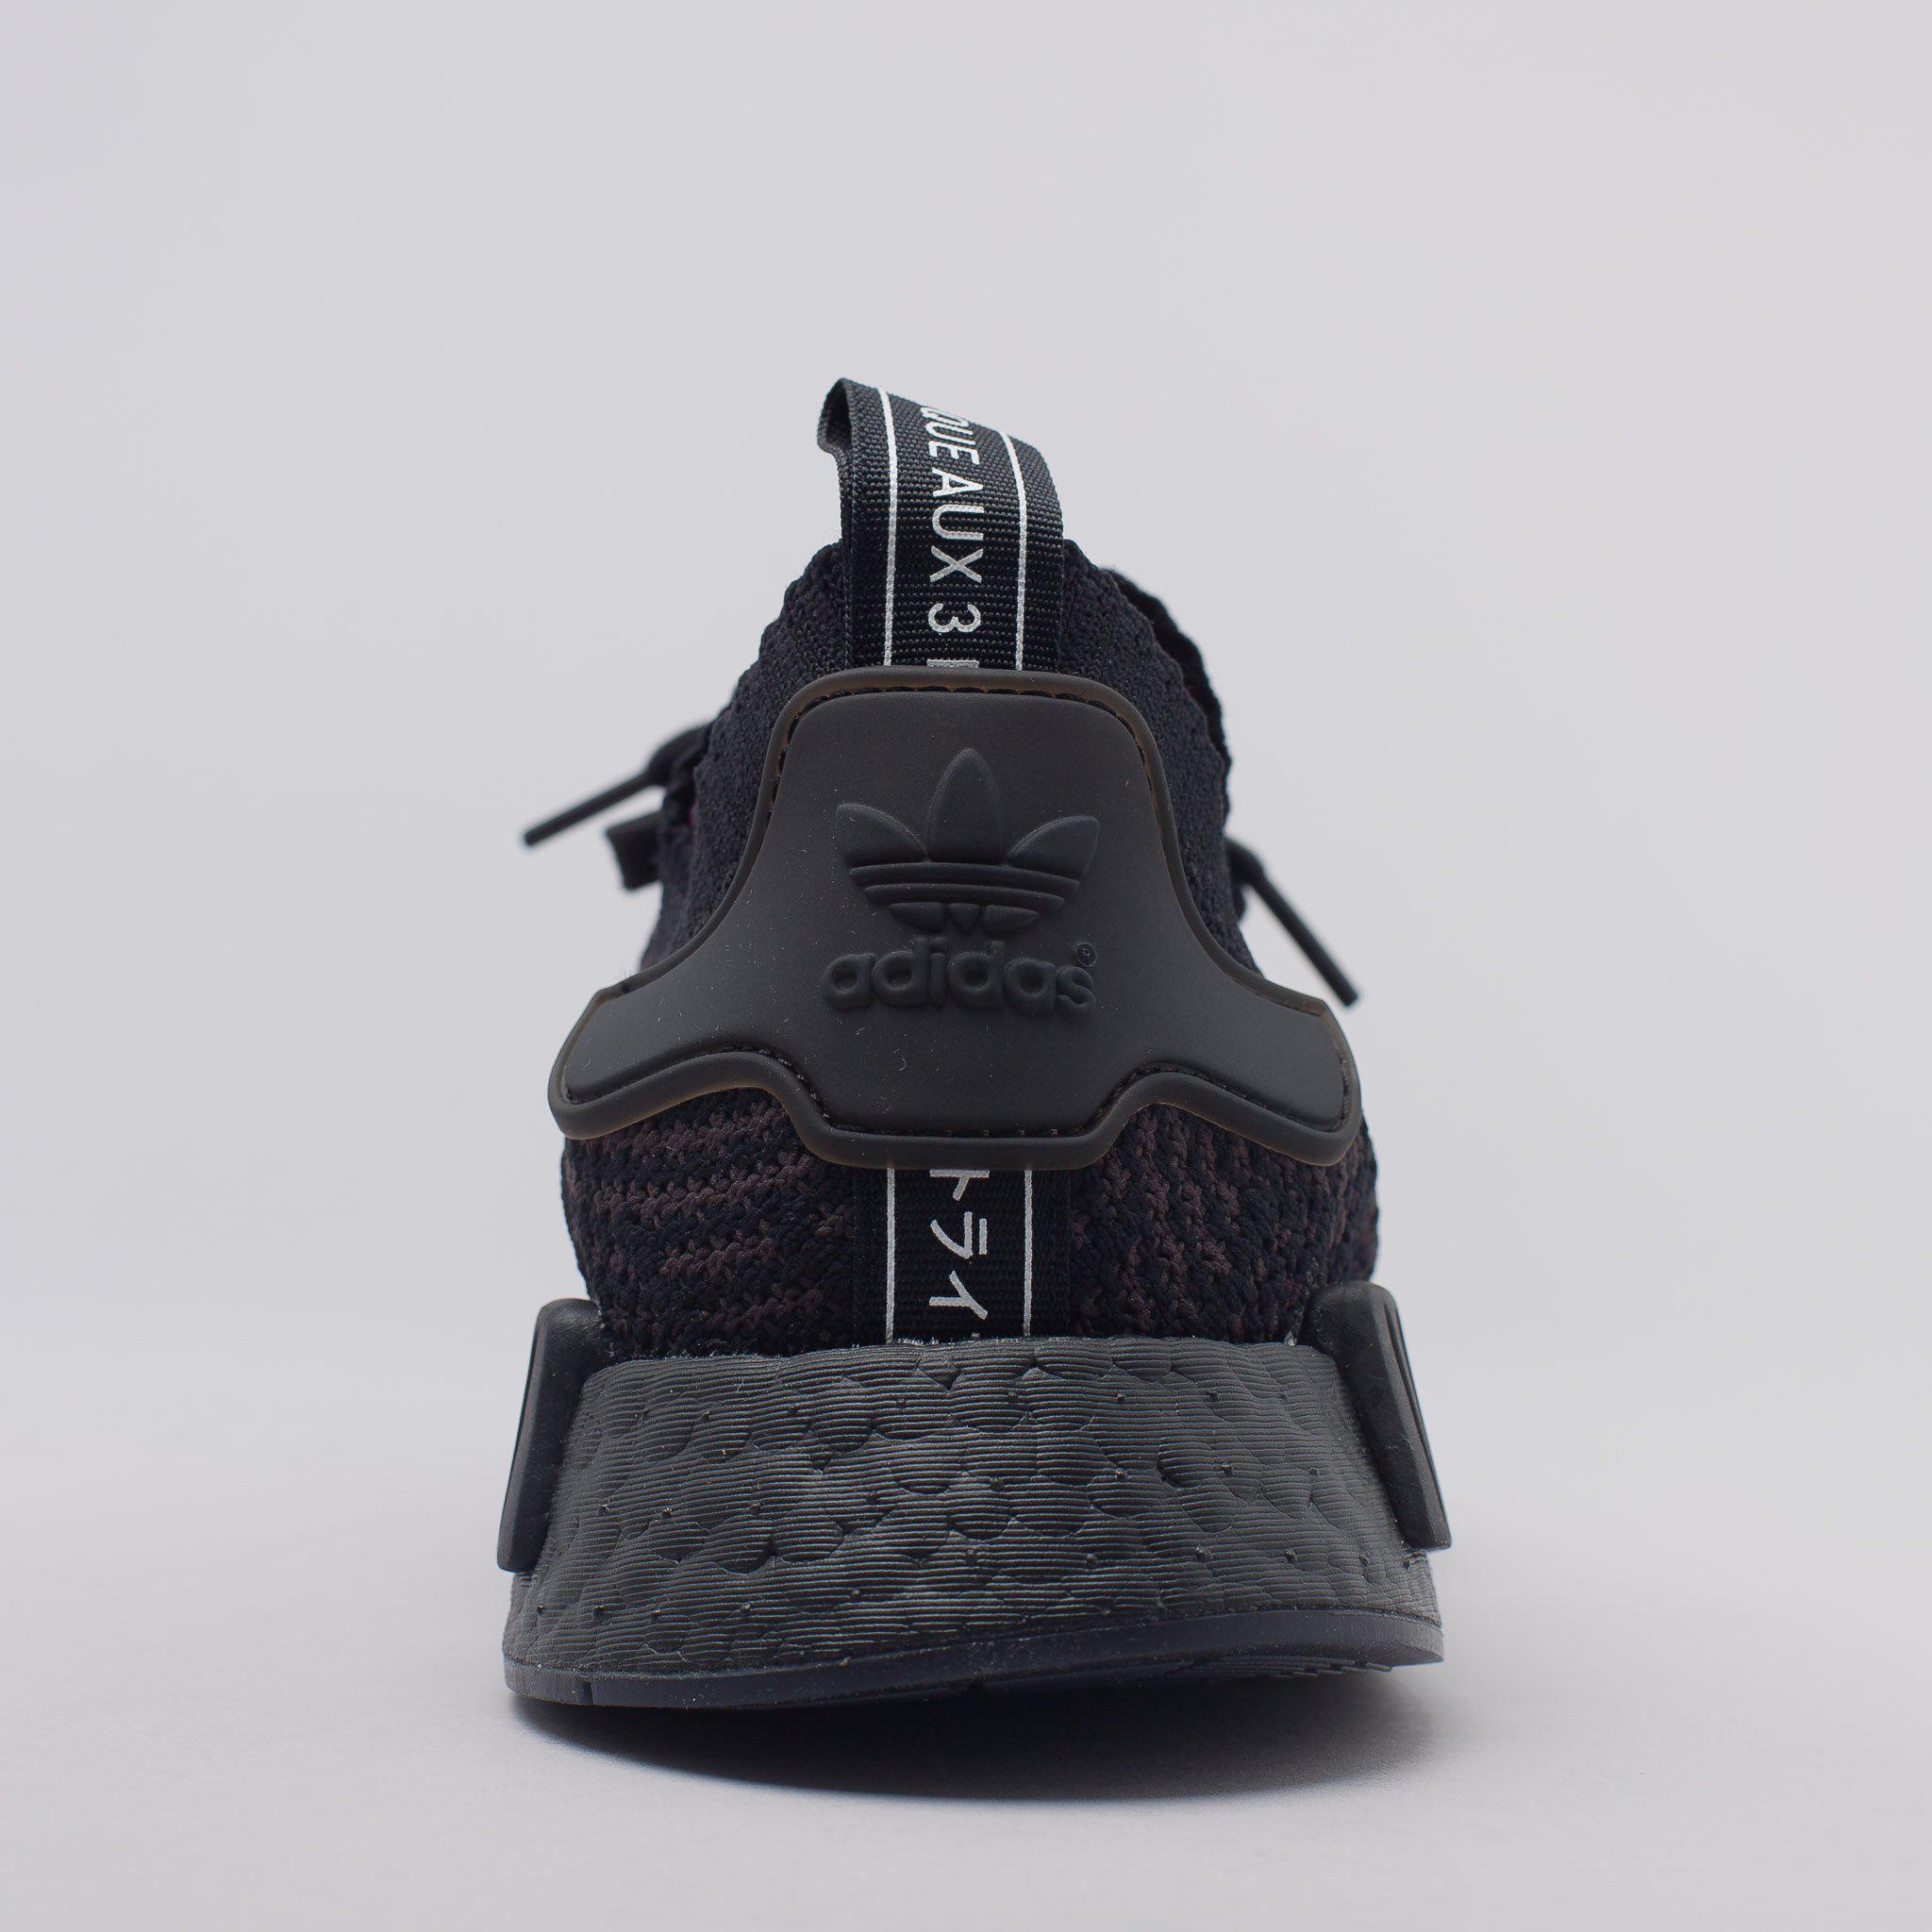 adidas Rubber Nmd R1 Stlt Primeknit In Triple Black for Men - Lyst